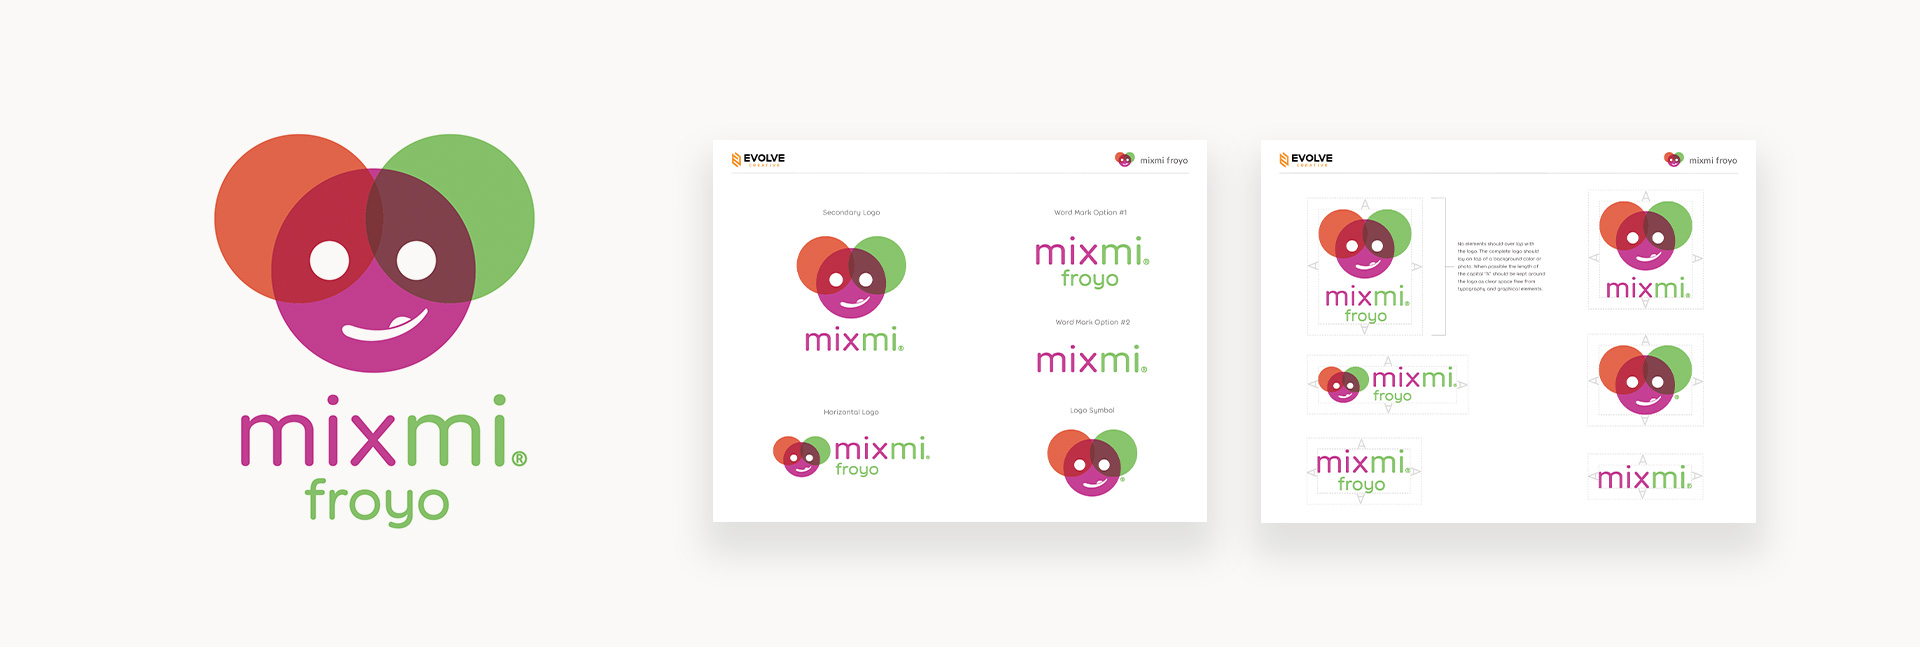 Mixmi branding